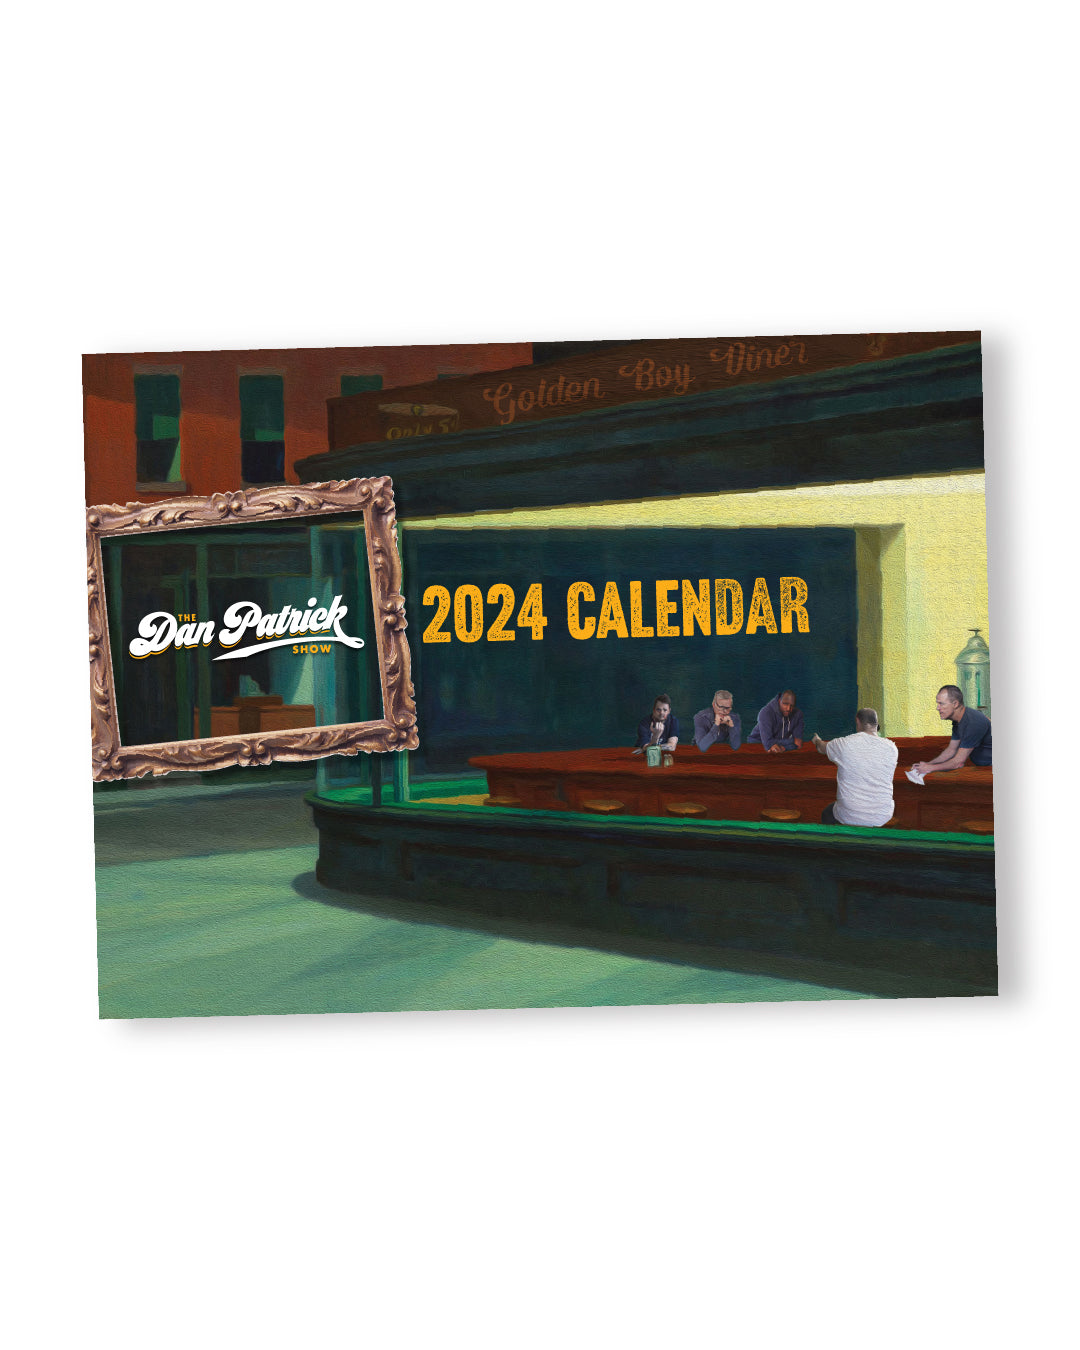 The Dan Patrick Show 2024 Calendar